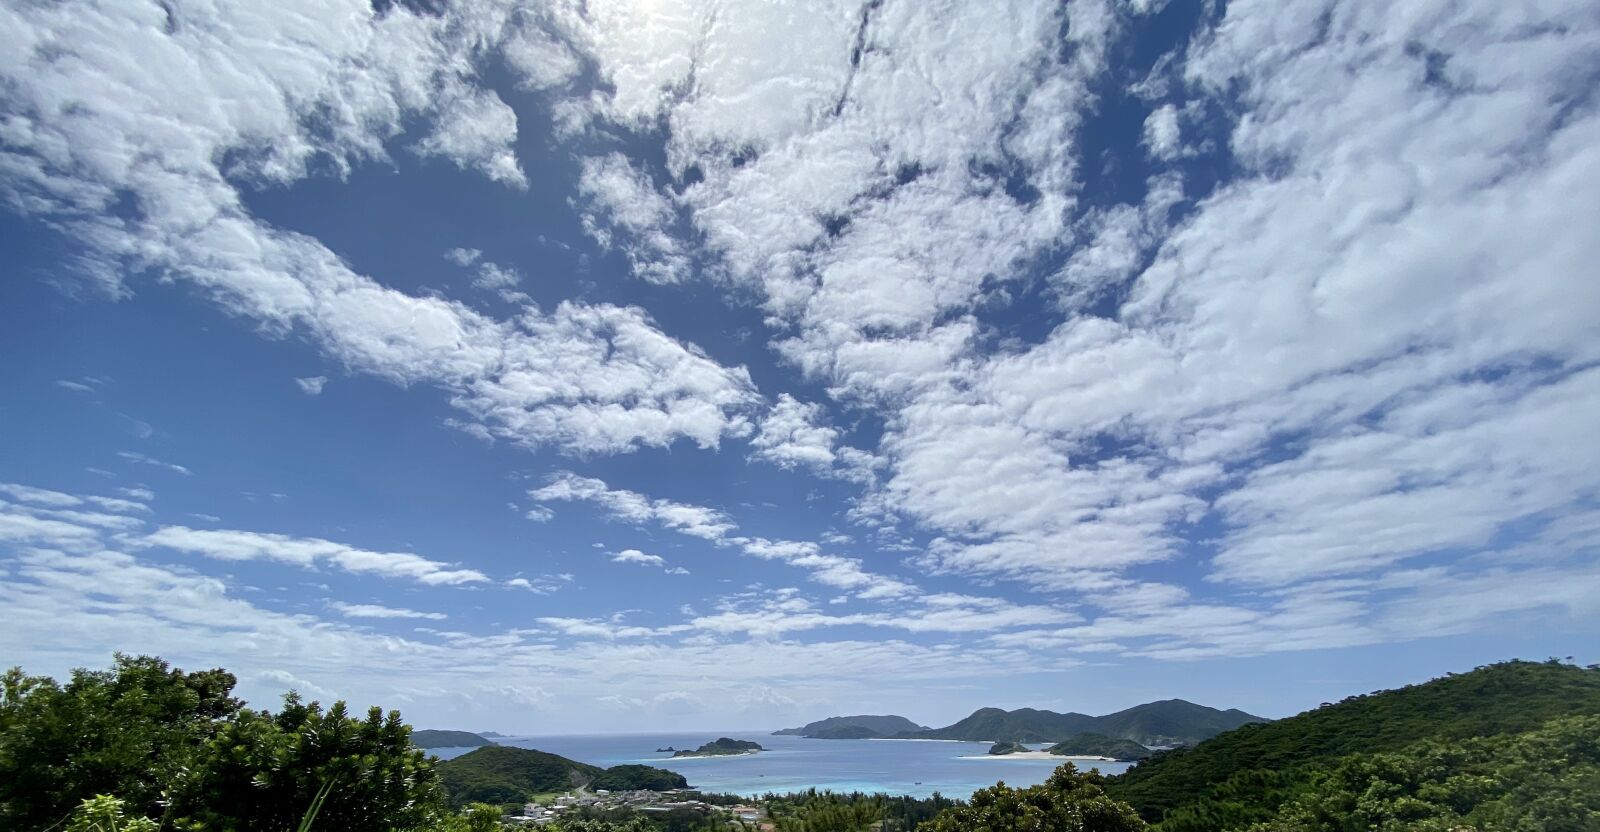 iPhone 11 Pro back triple camera 1.54mm f/2.4 sample photo. Sky, okinawa, sea photography